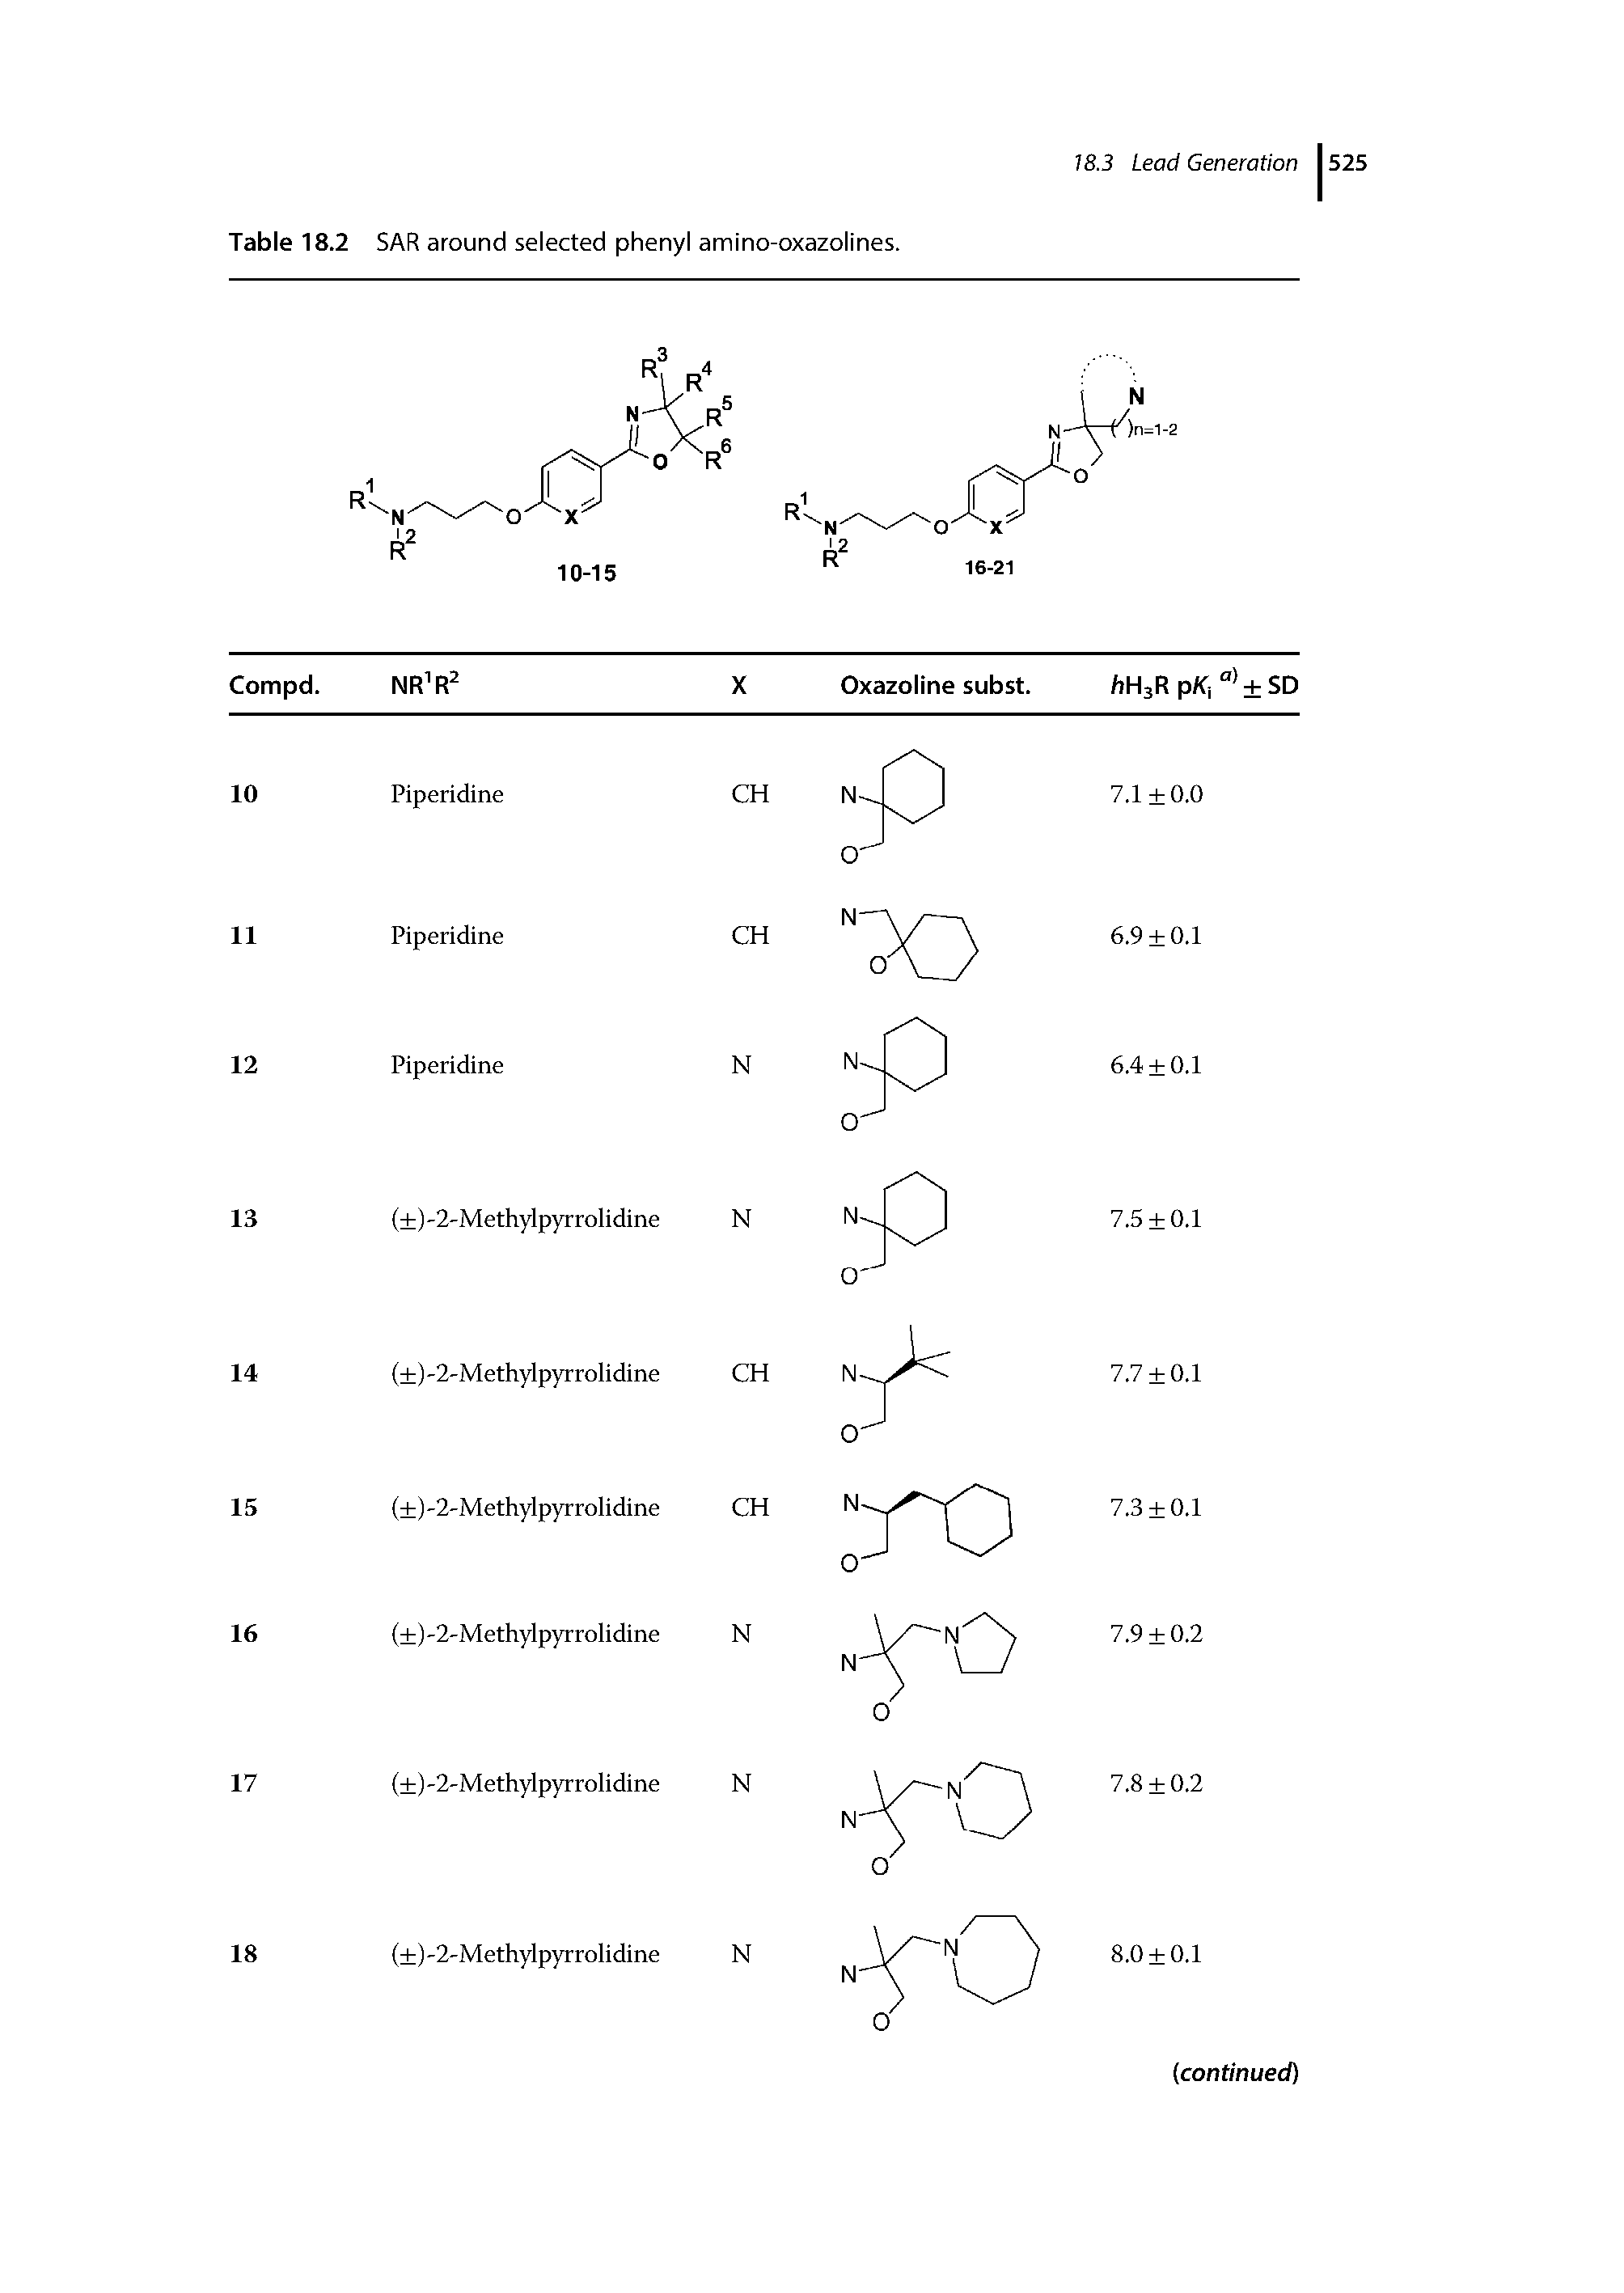 Table 18.2 SAR around selected phenyl amino-oxazolines.